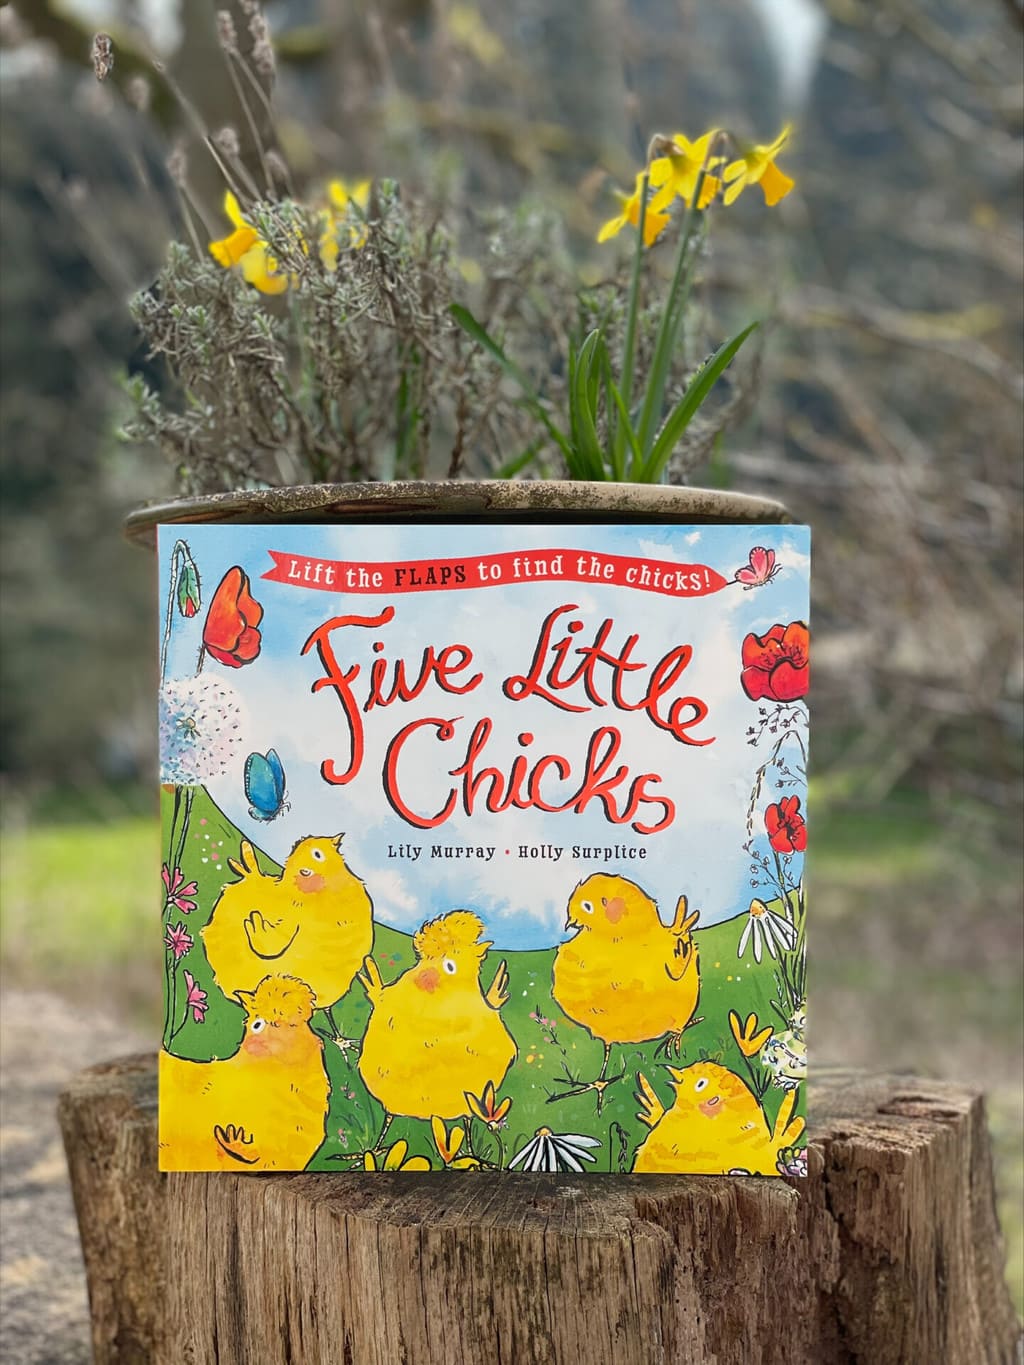 Five Little Chicks – Lily Murray (author), Holly Surplice (illustrator), Templar Books (imprint of Bonnier Books) (publisher)